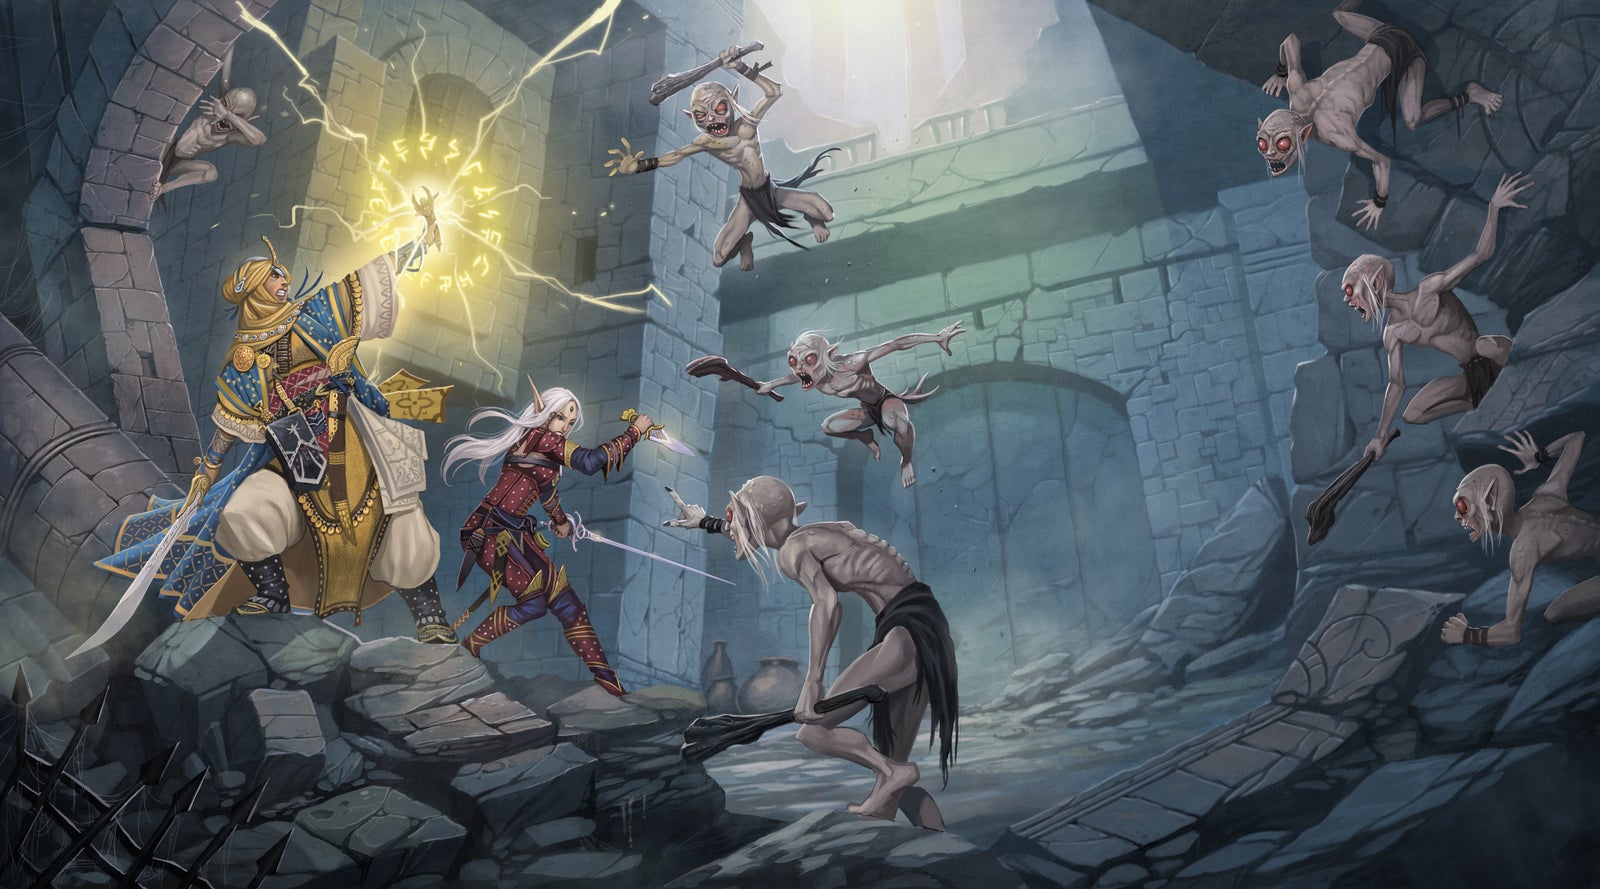 Iconics Kyra and Merisiel battle a small group of skeletal morlocks in crumbling ruins